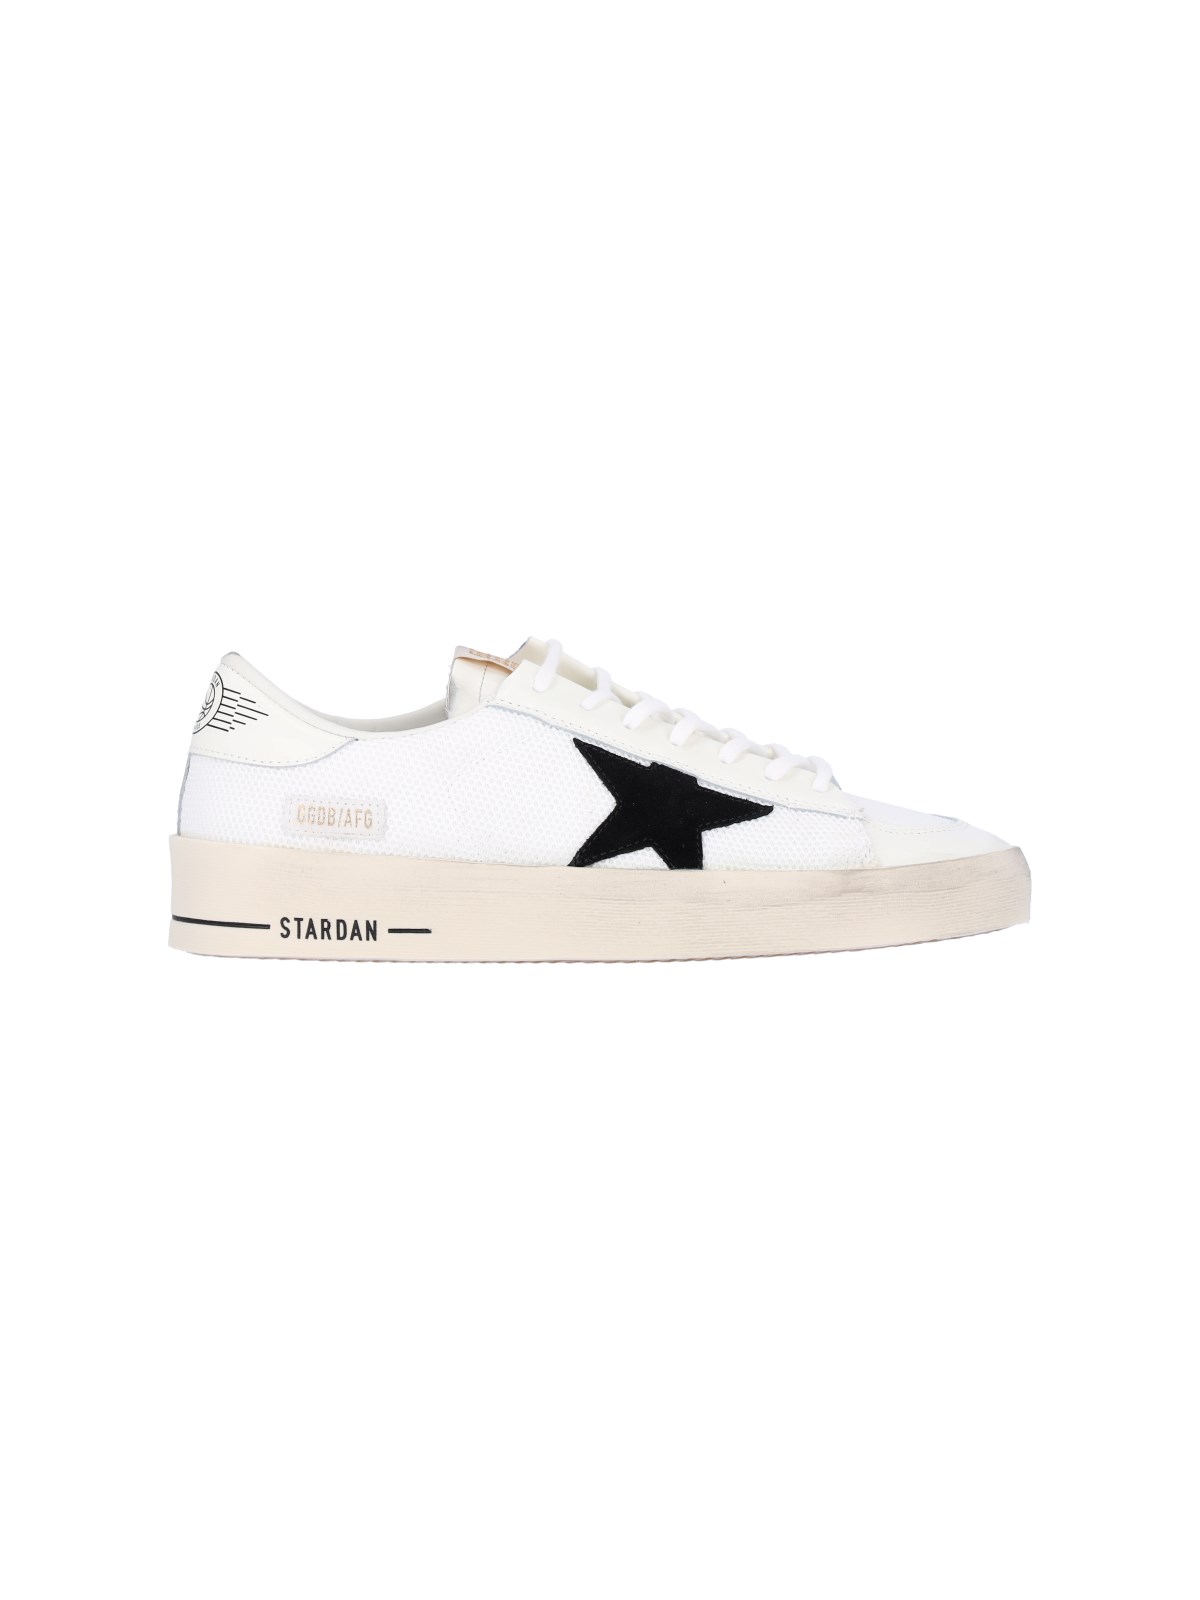 Golden Goose 'stardan' Sneakers In White